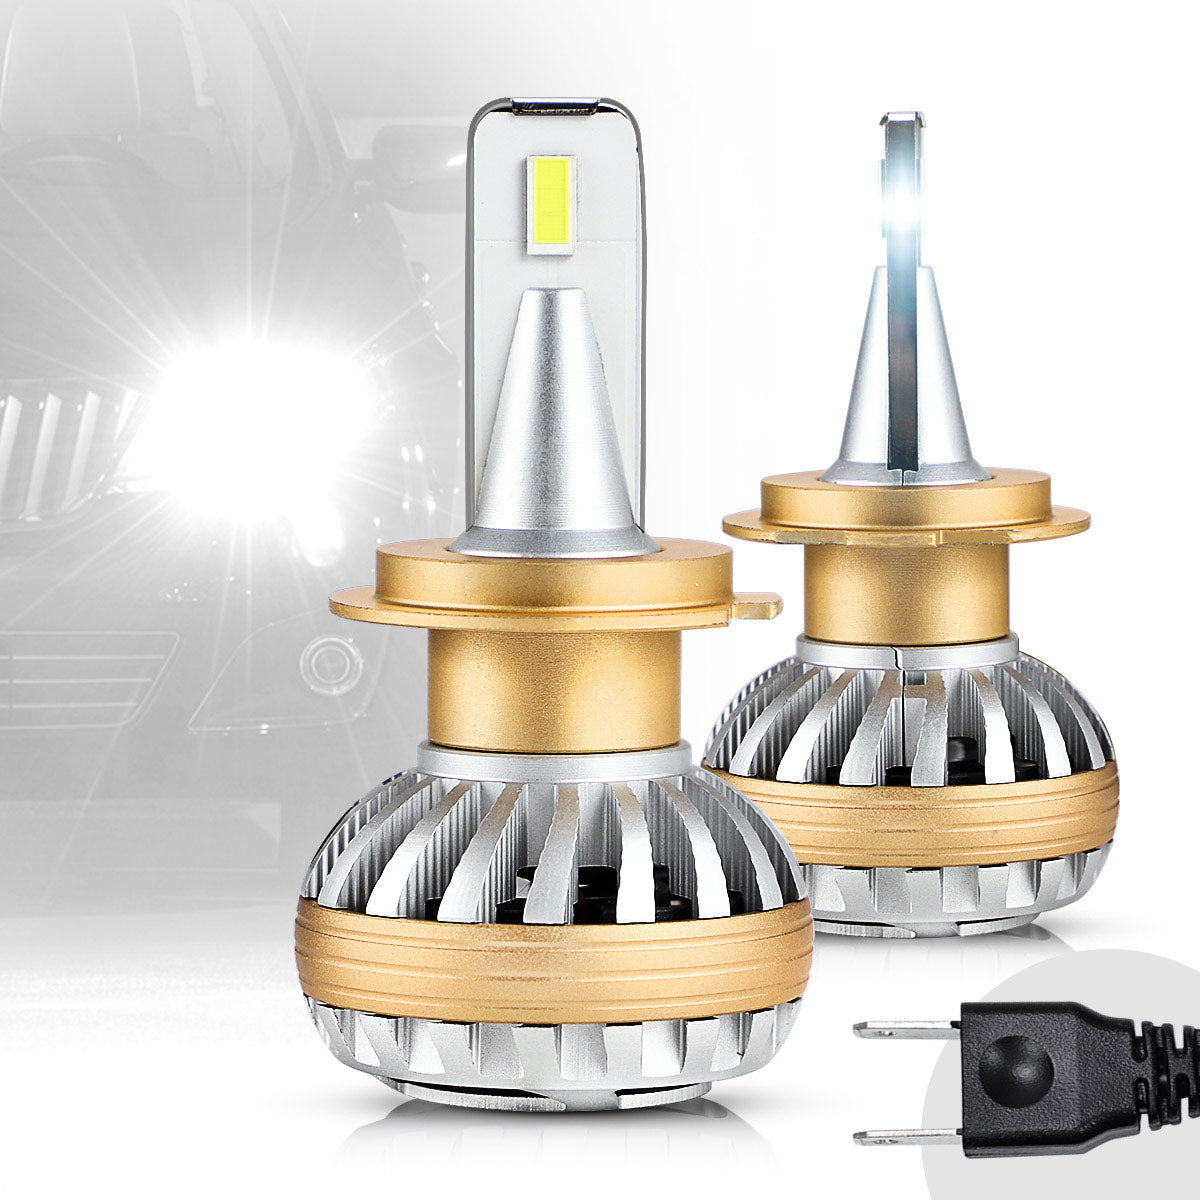 VLAND 2PCs D2S/H7/9005 LED Bulbs 6000K Fit for Headlights don't need Ballast BULBS 